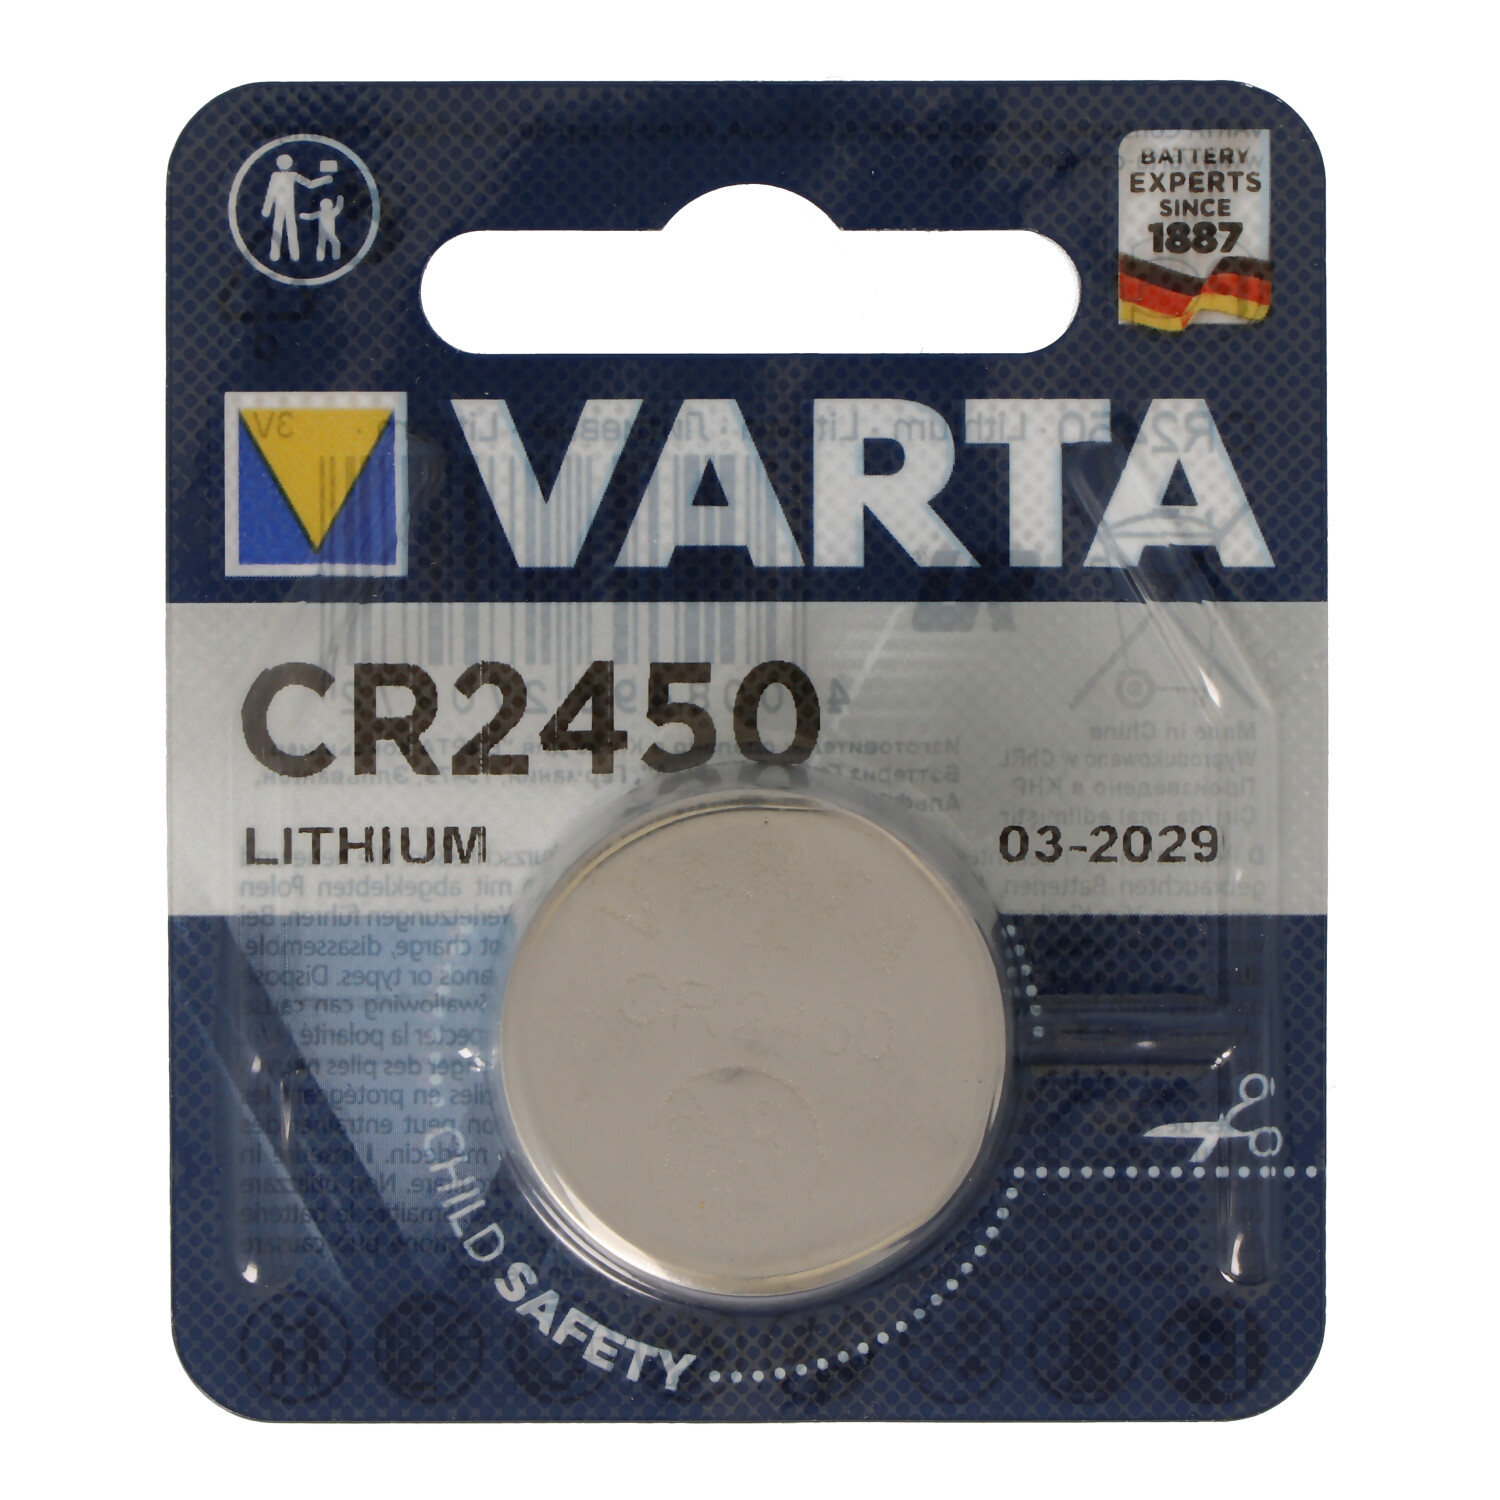 Batterie passend für Philips HUE Dimmschalter 1x Varta CR2450 Lithium Batterie IEC CR 2450